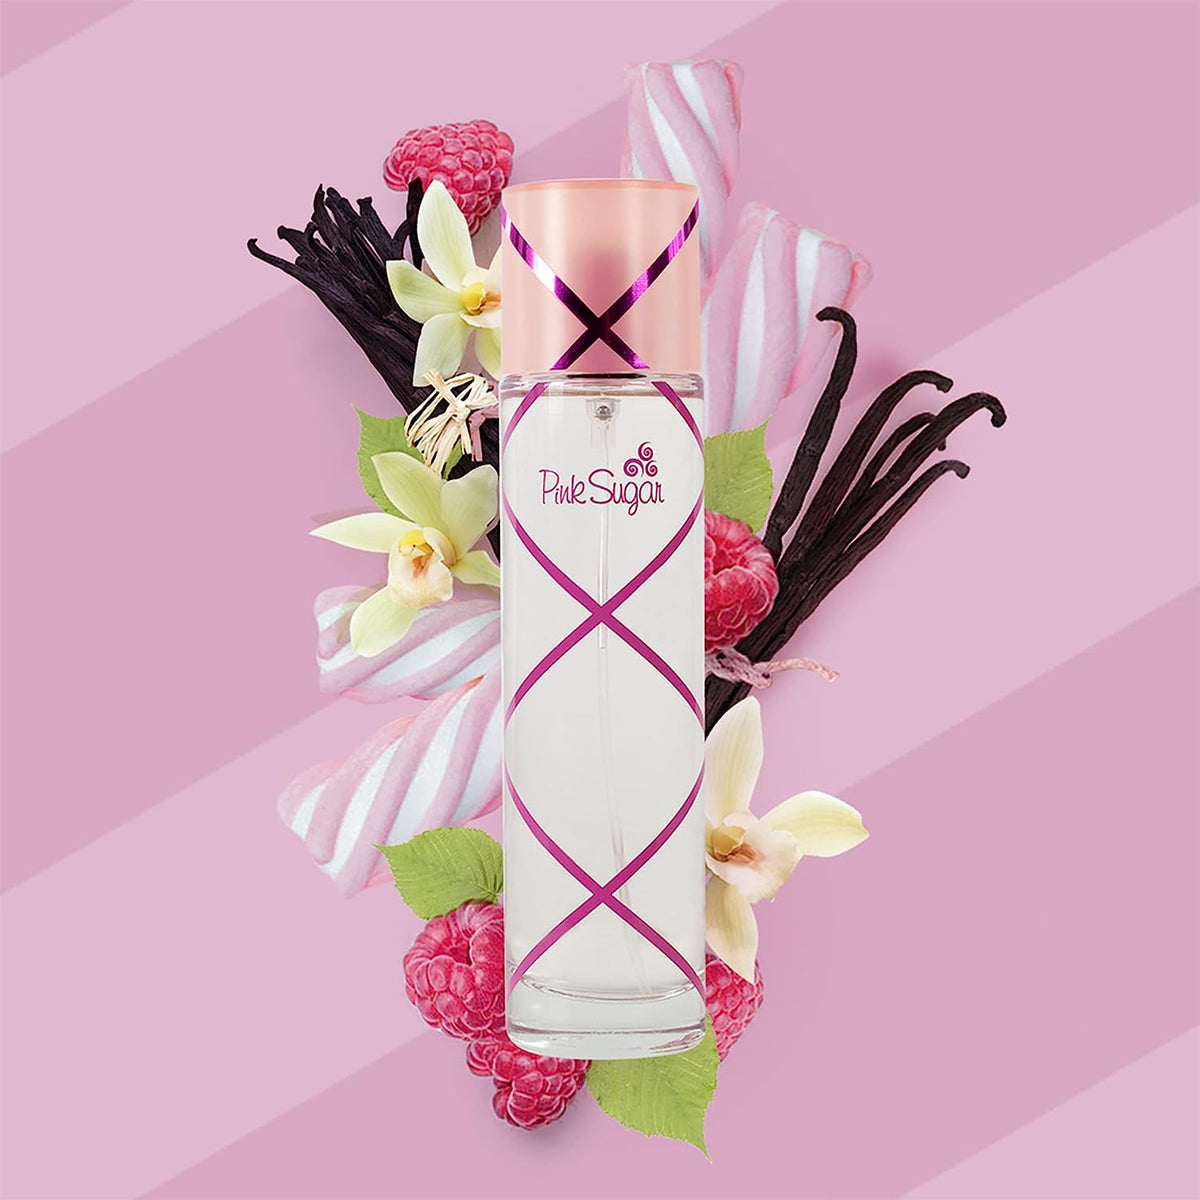 Pink Sugar By Aquolina For Women - Eau De Toilette, 100ml